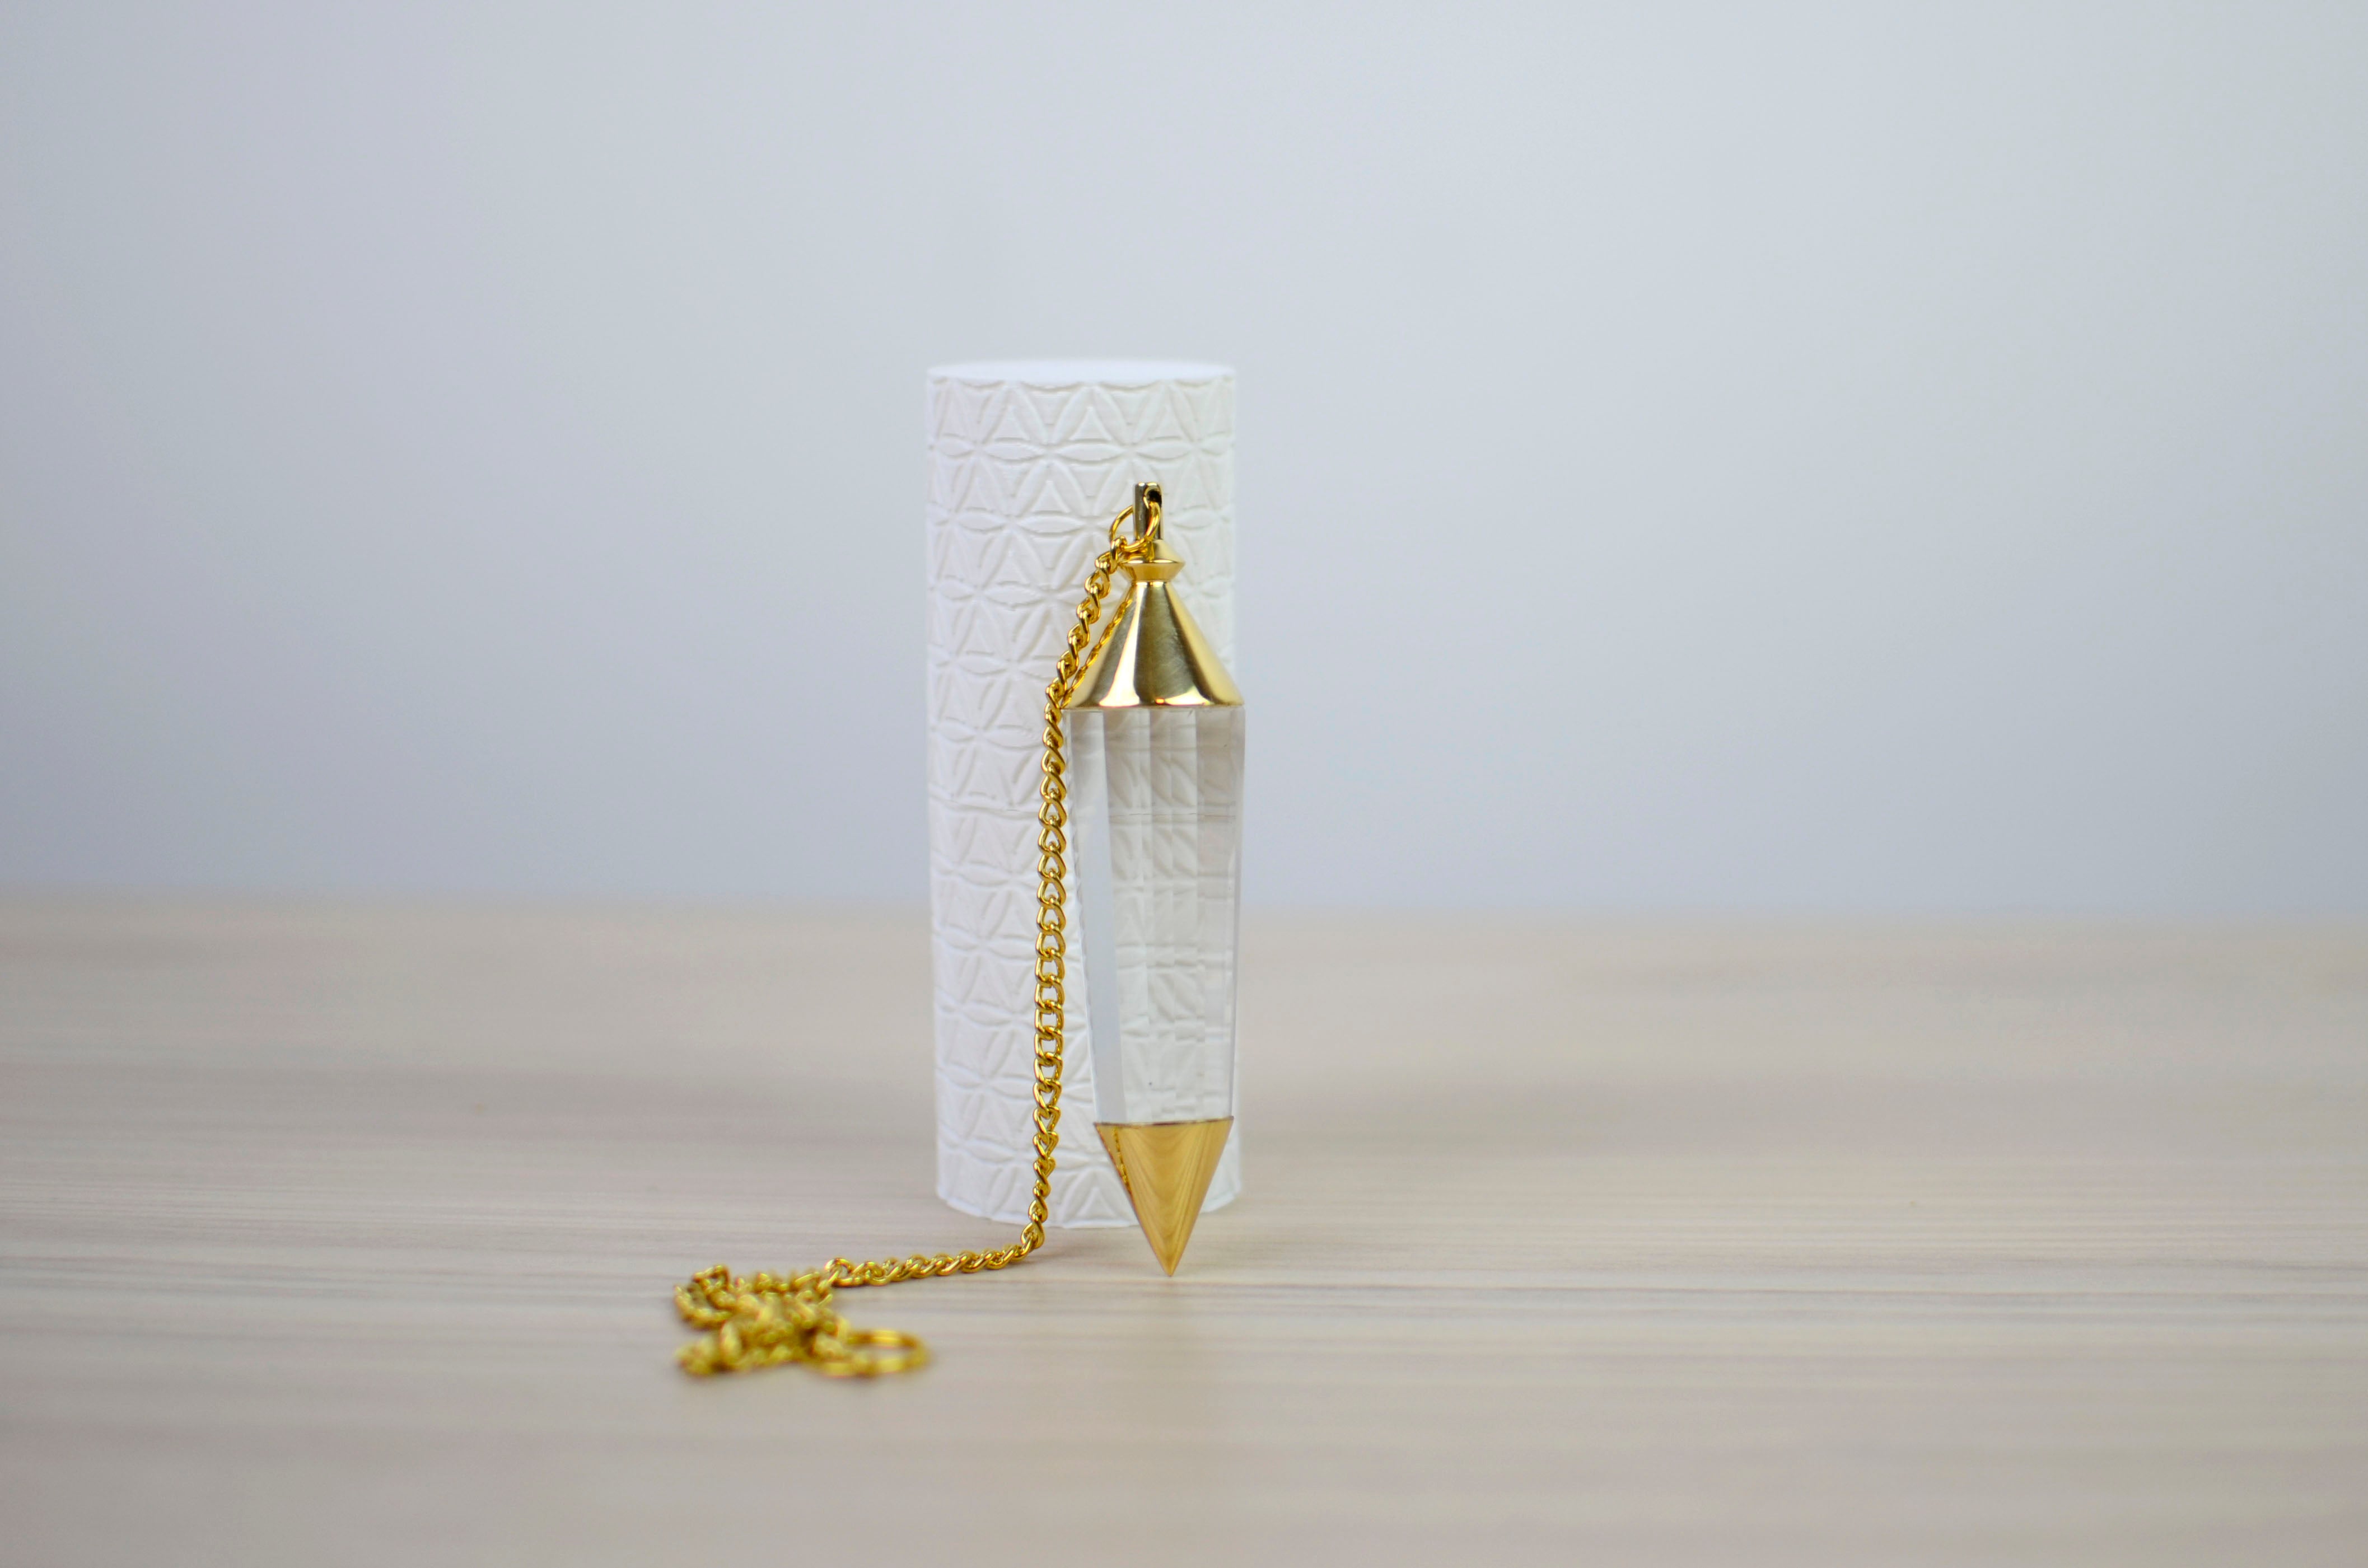 Vogel crystal pendant necklace/pendulum 2in1